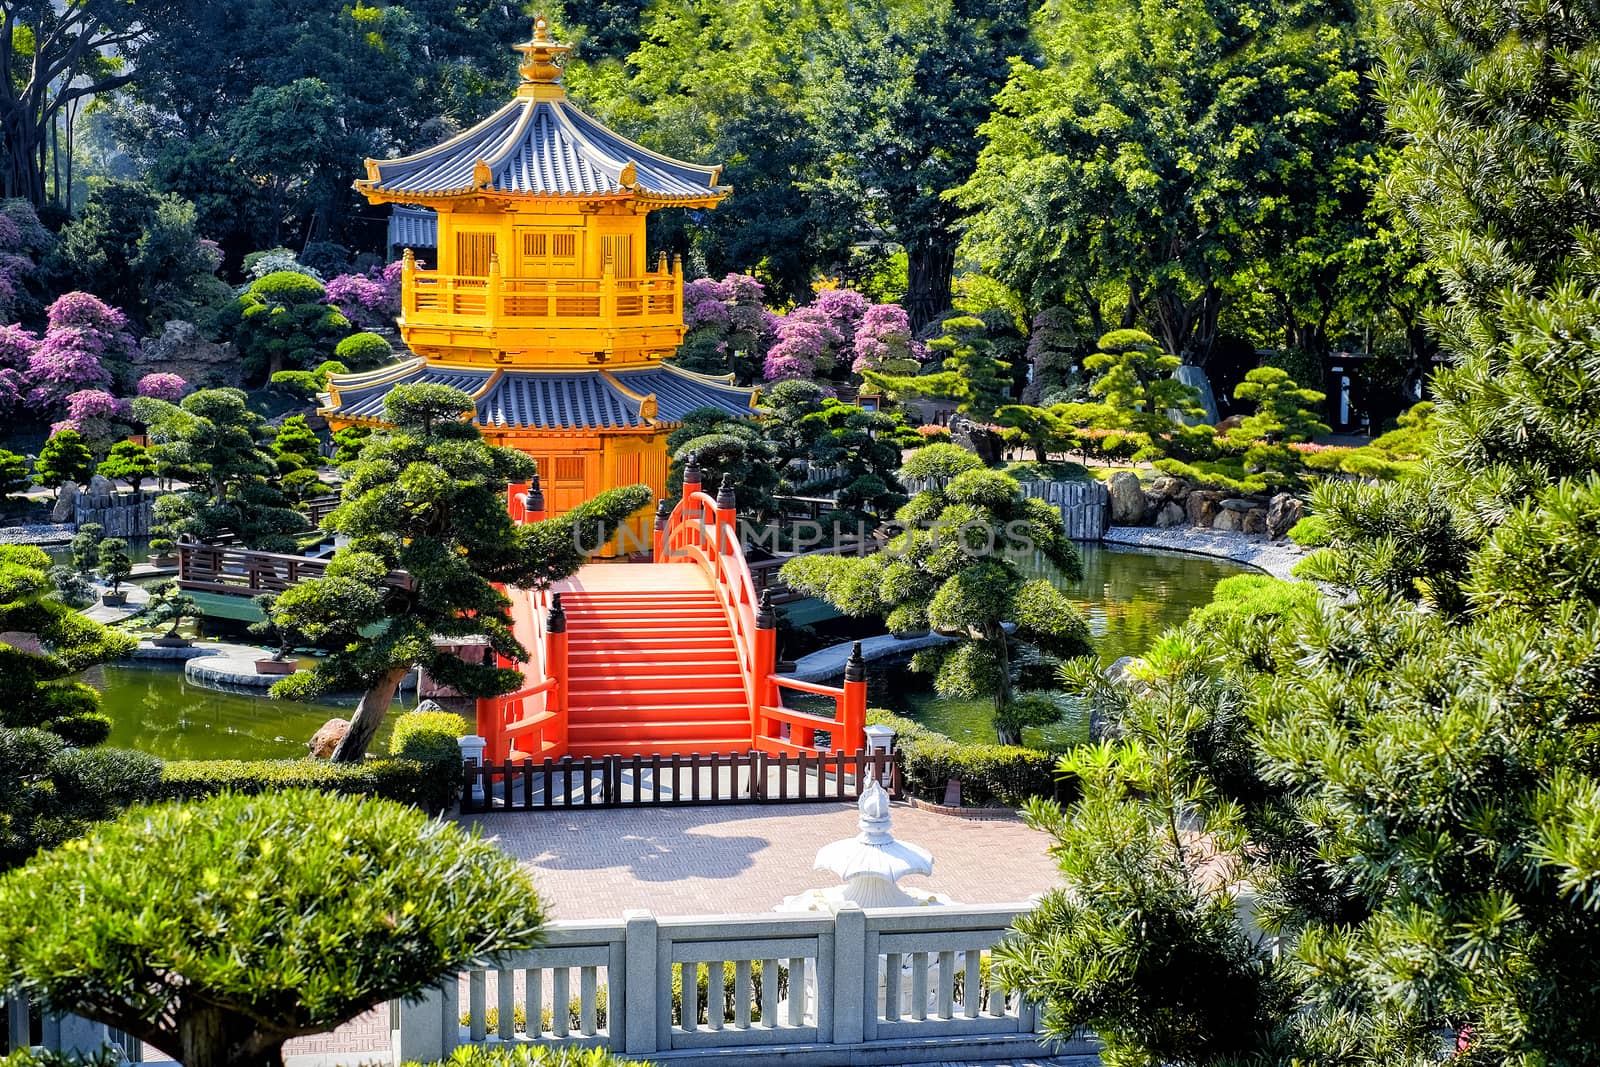 Front View The Golden Pavilion Temple in Nan Lian Garden by Surasak